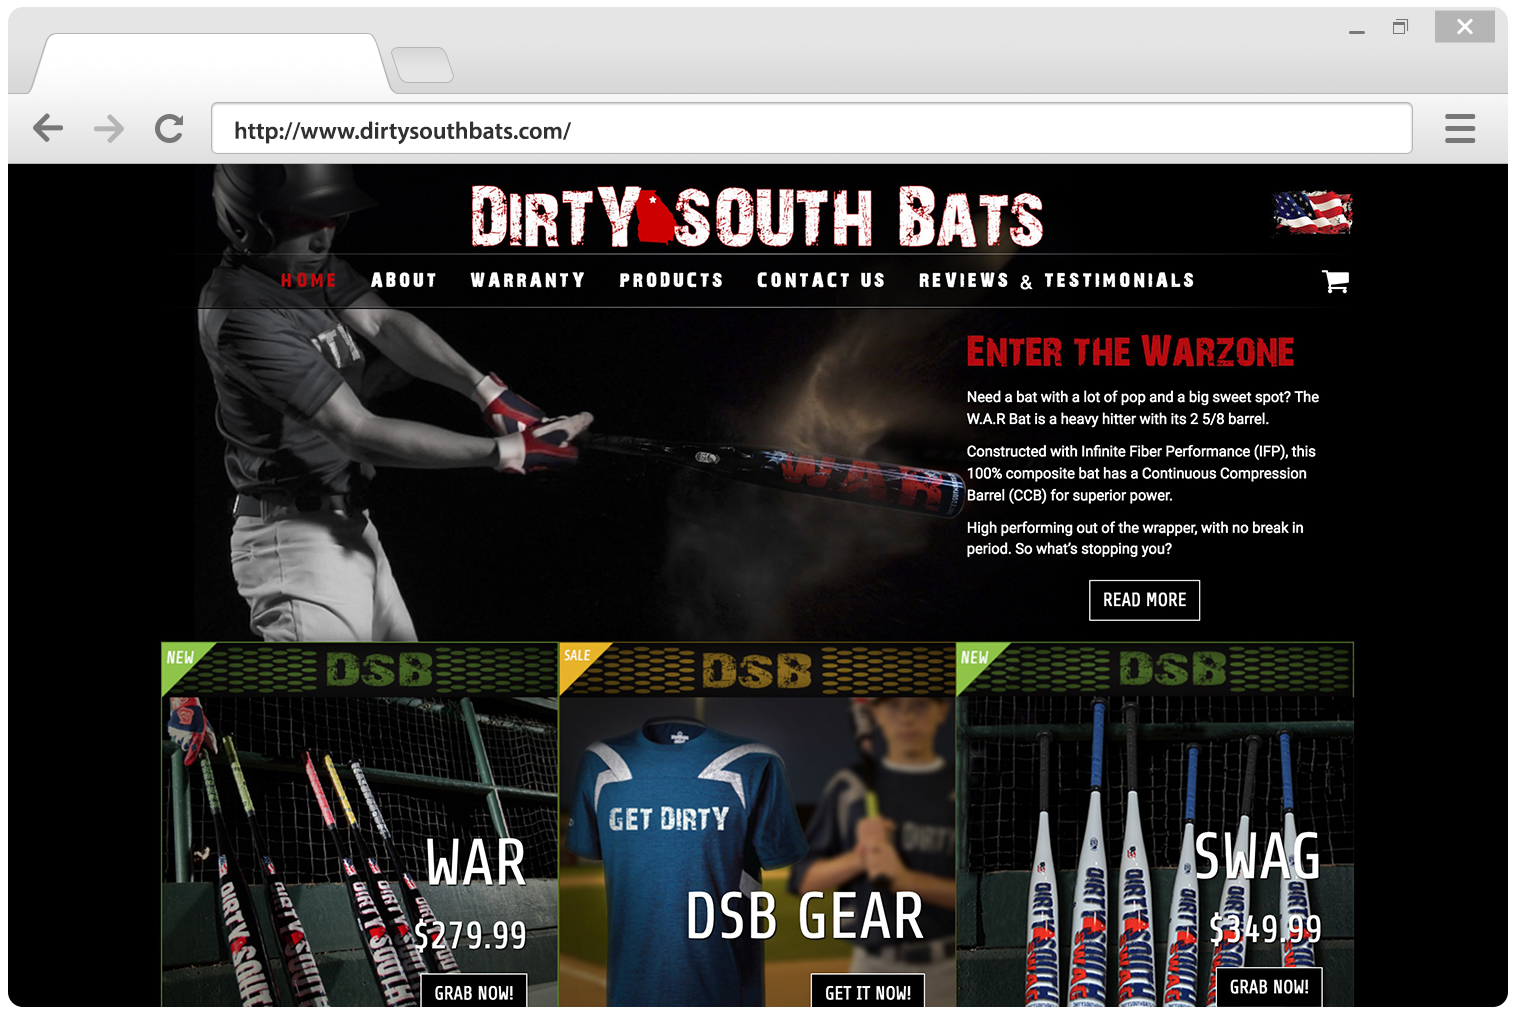 Dirty South Bats